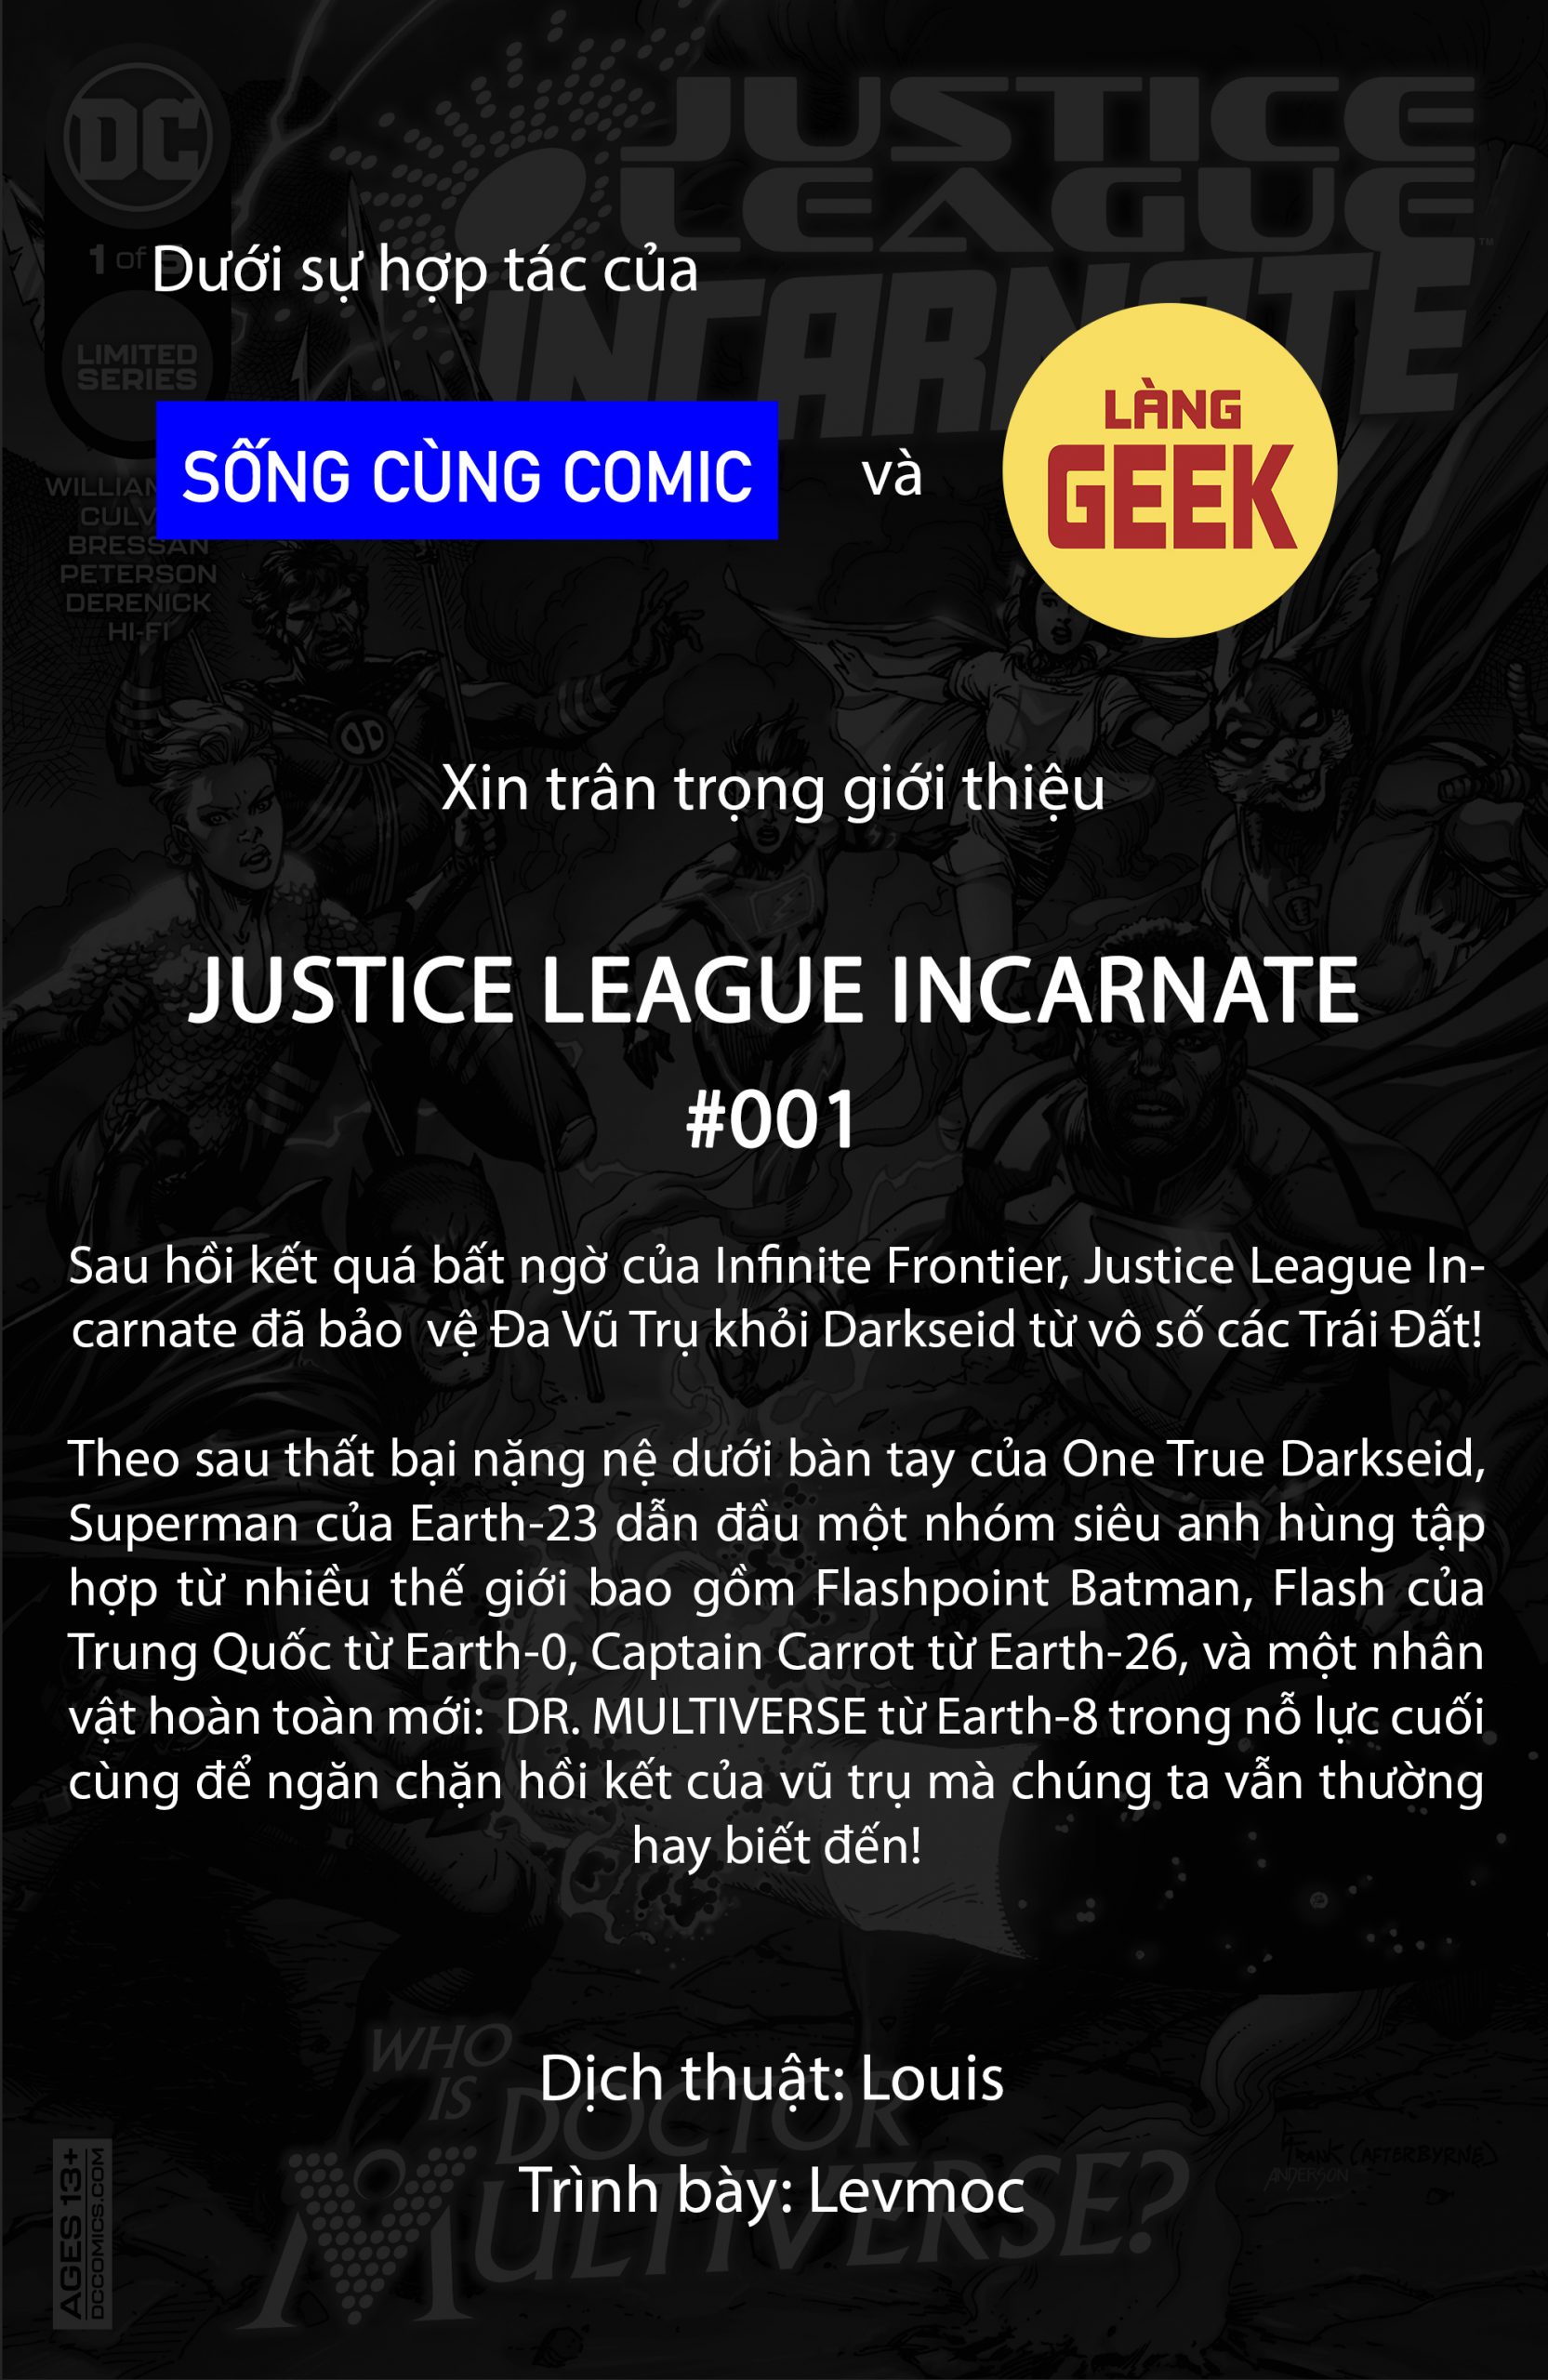 https://langgeek.net/wp-content/uploads/2021/12/Justice-League-Incarnate-2021-001-001-scaled.jpg